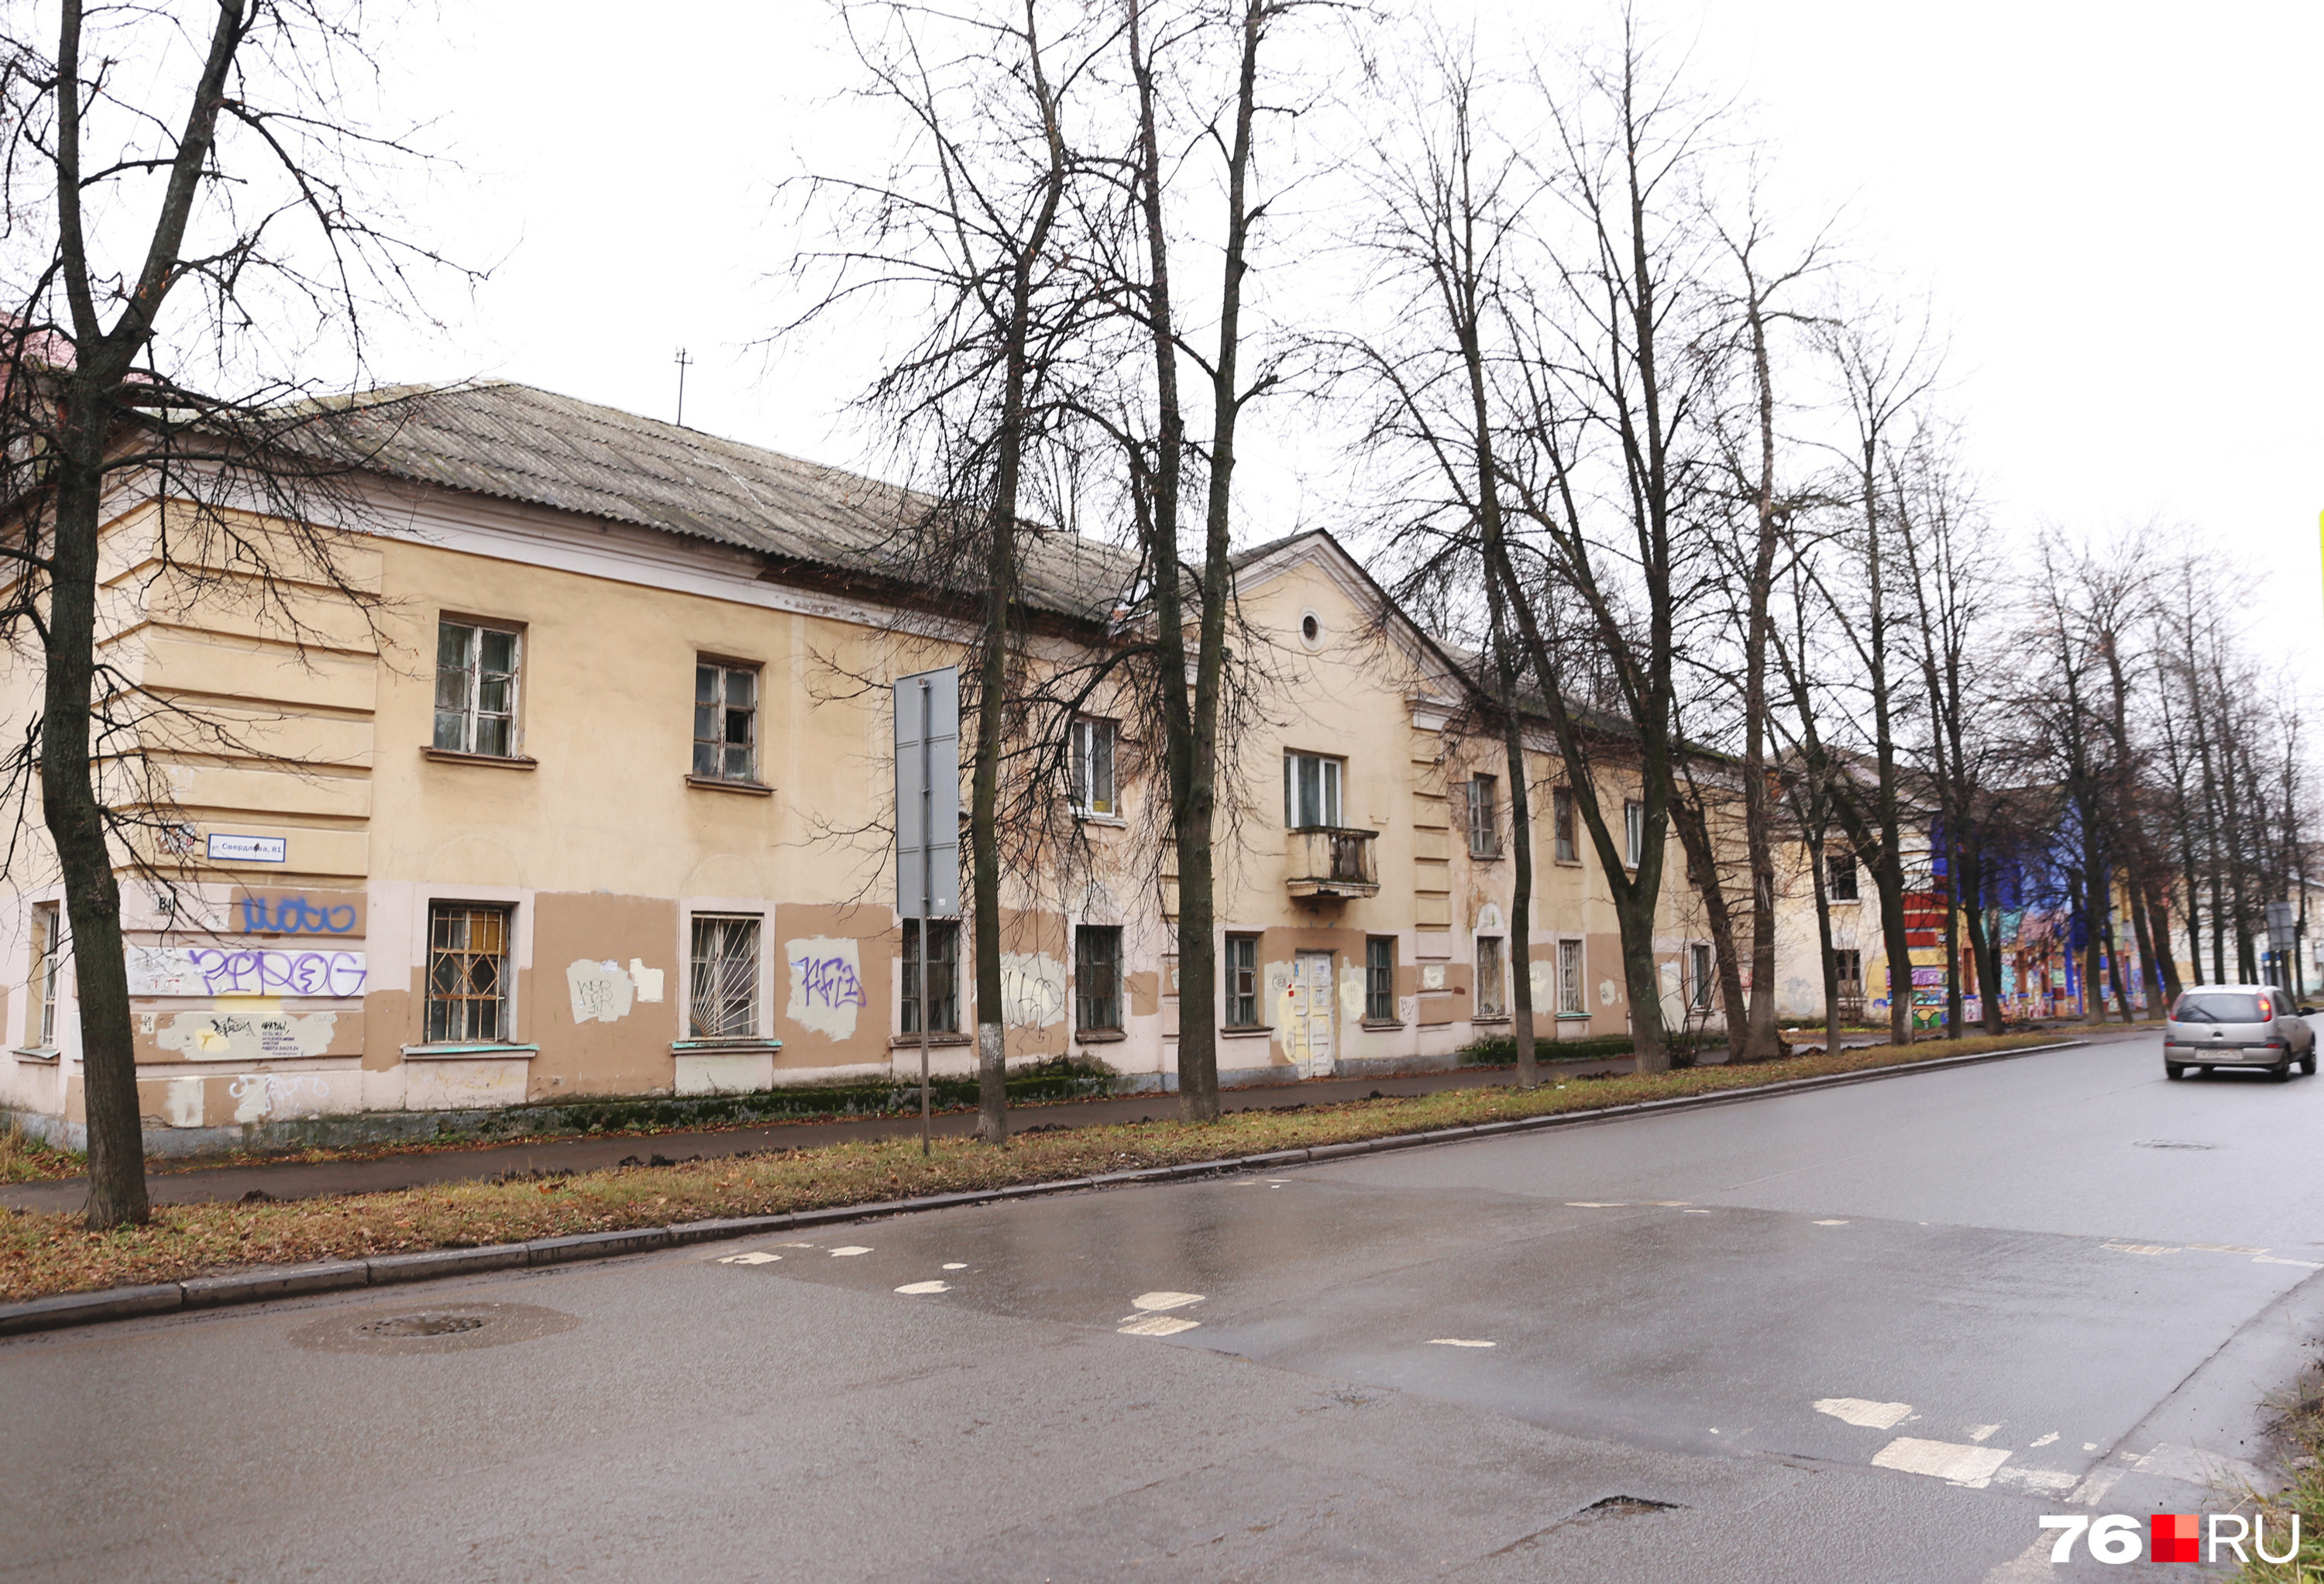 Дом № 81 по улице Свердлова уже давно признан аварийным